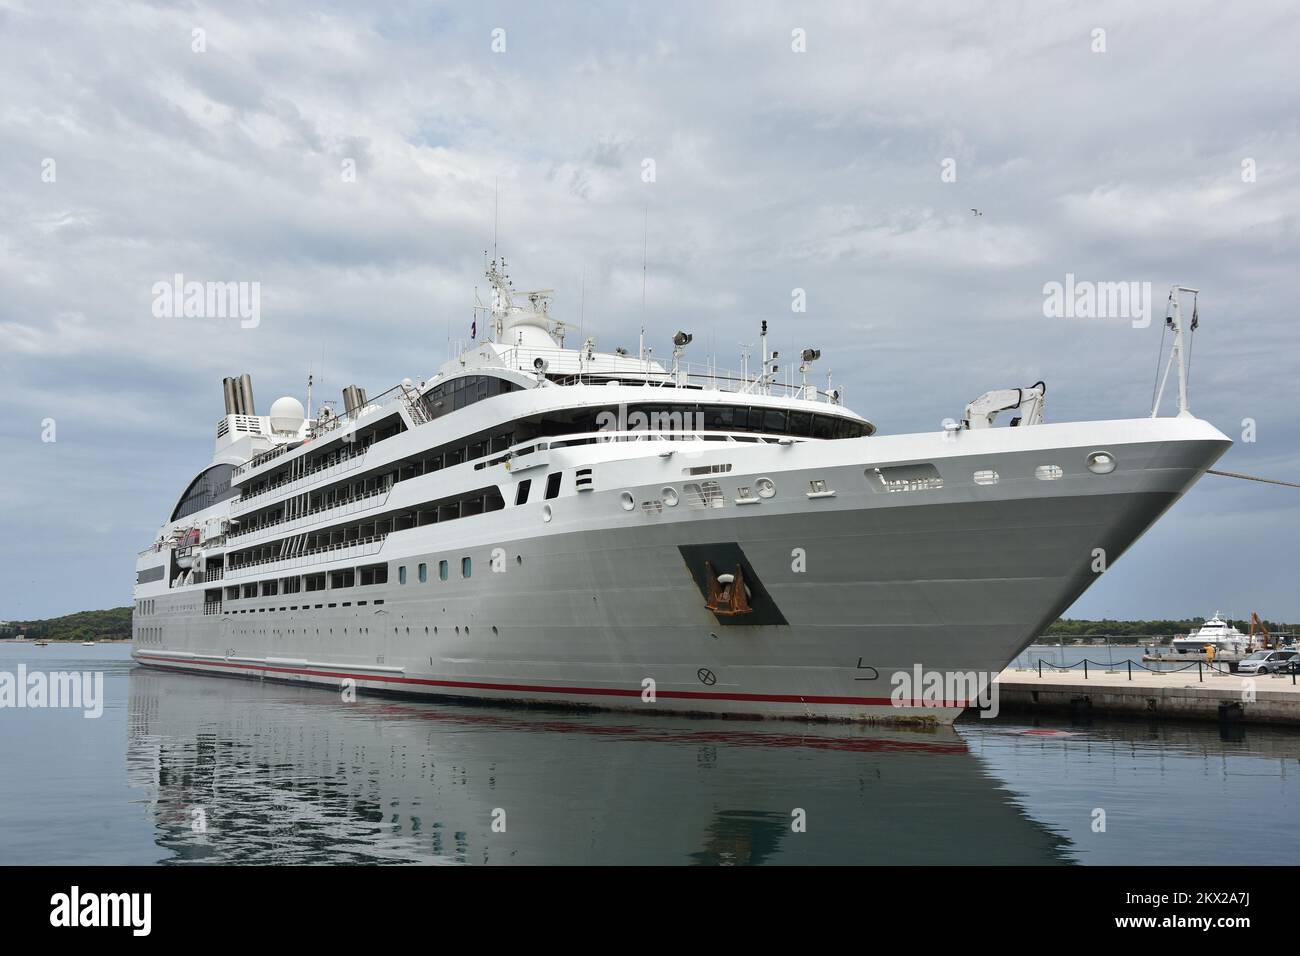 28.08.2017., Pula, Croatia - The cruiser Le Lyrial who sailed under the French flag sailed into the city harbor. Photo: Dusko Marusic / PIXSELL  Stock Photo